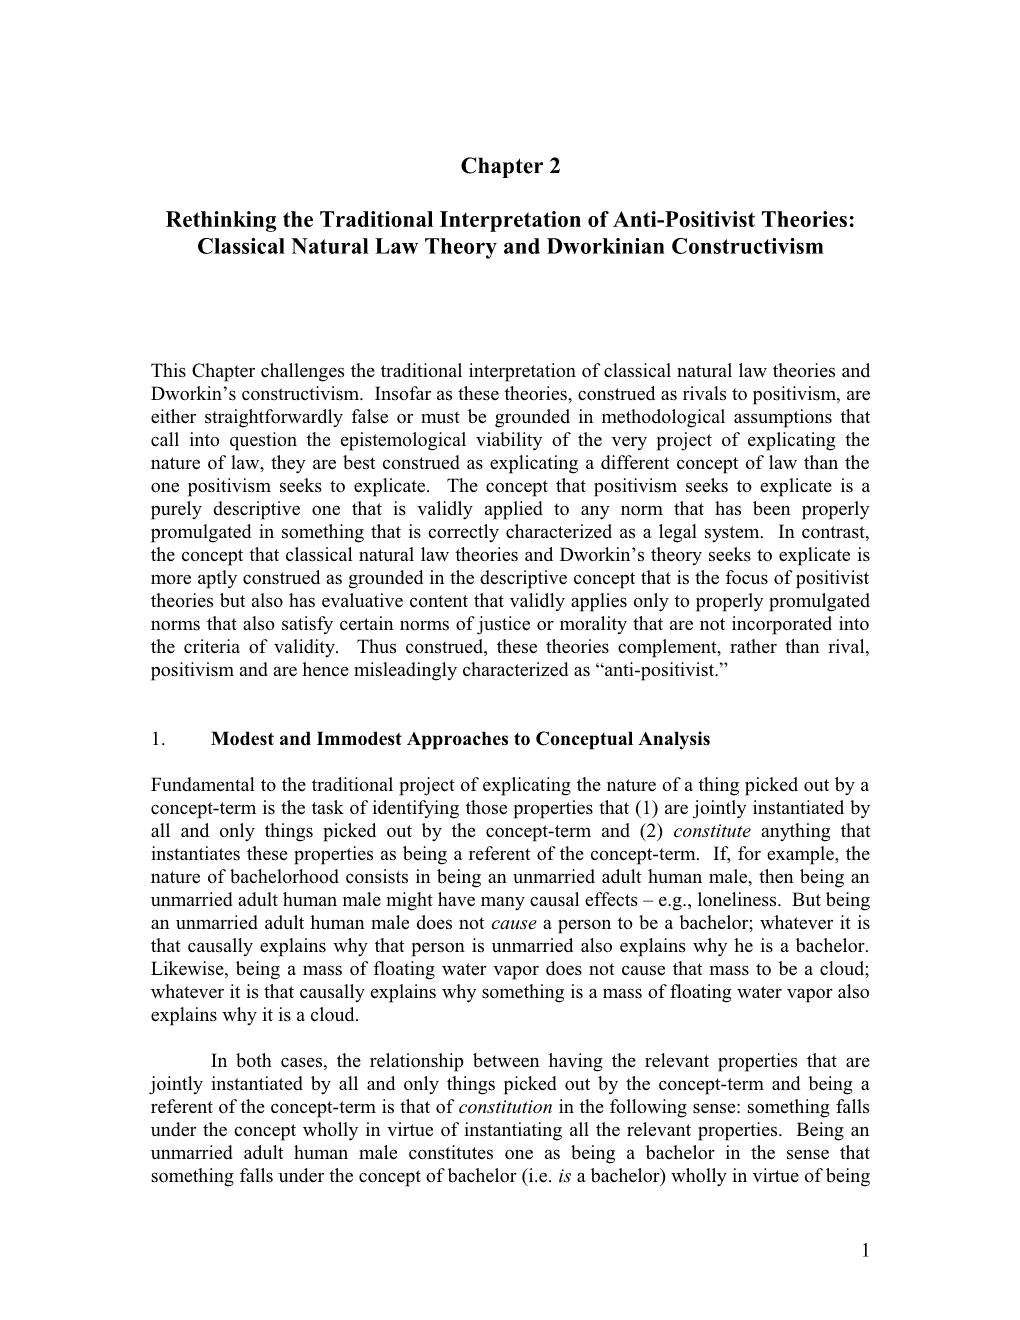 Rethinking the Traditional Interpretation of Anti-Positivist Theories: Classicalnatural